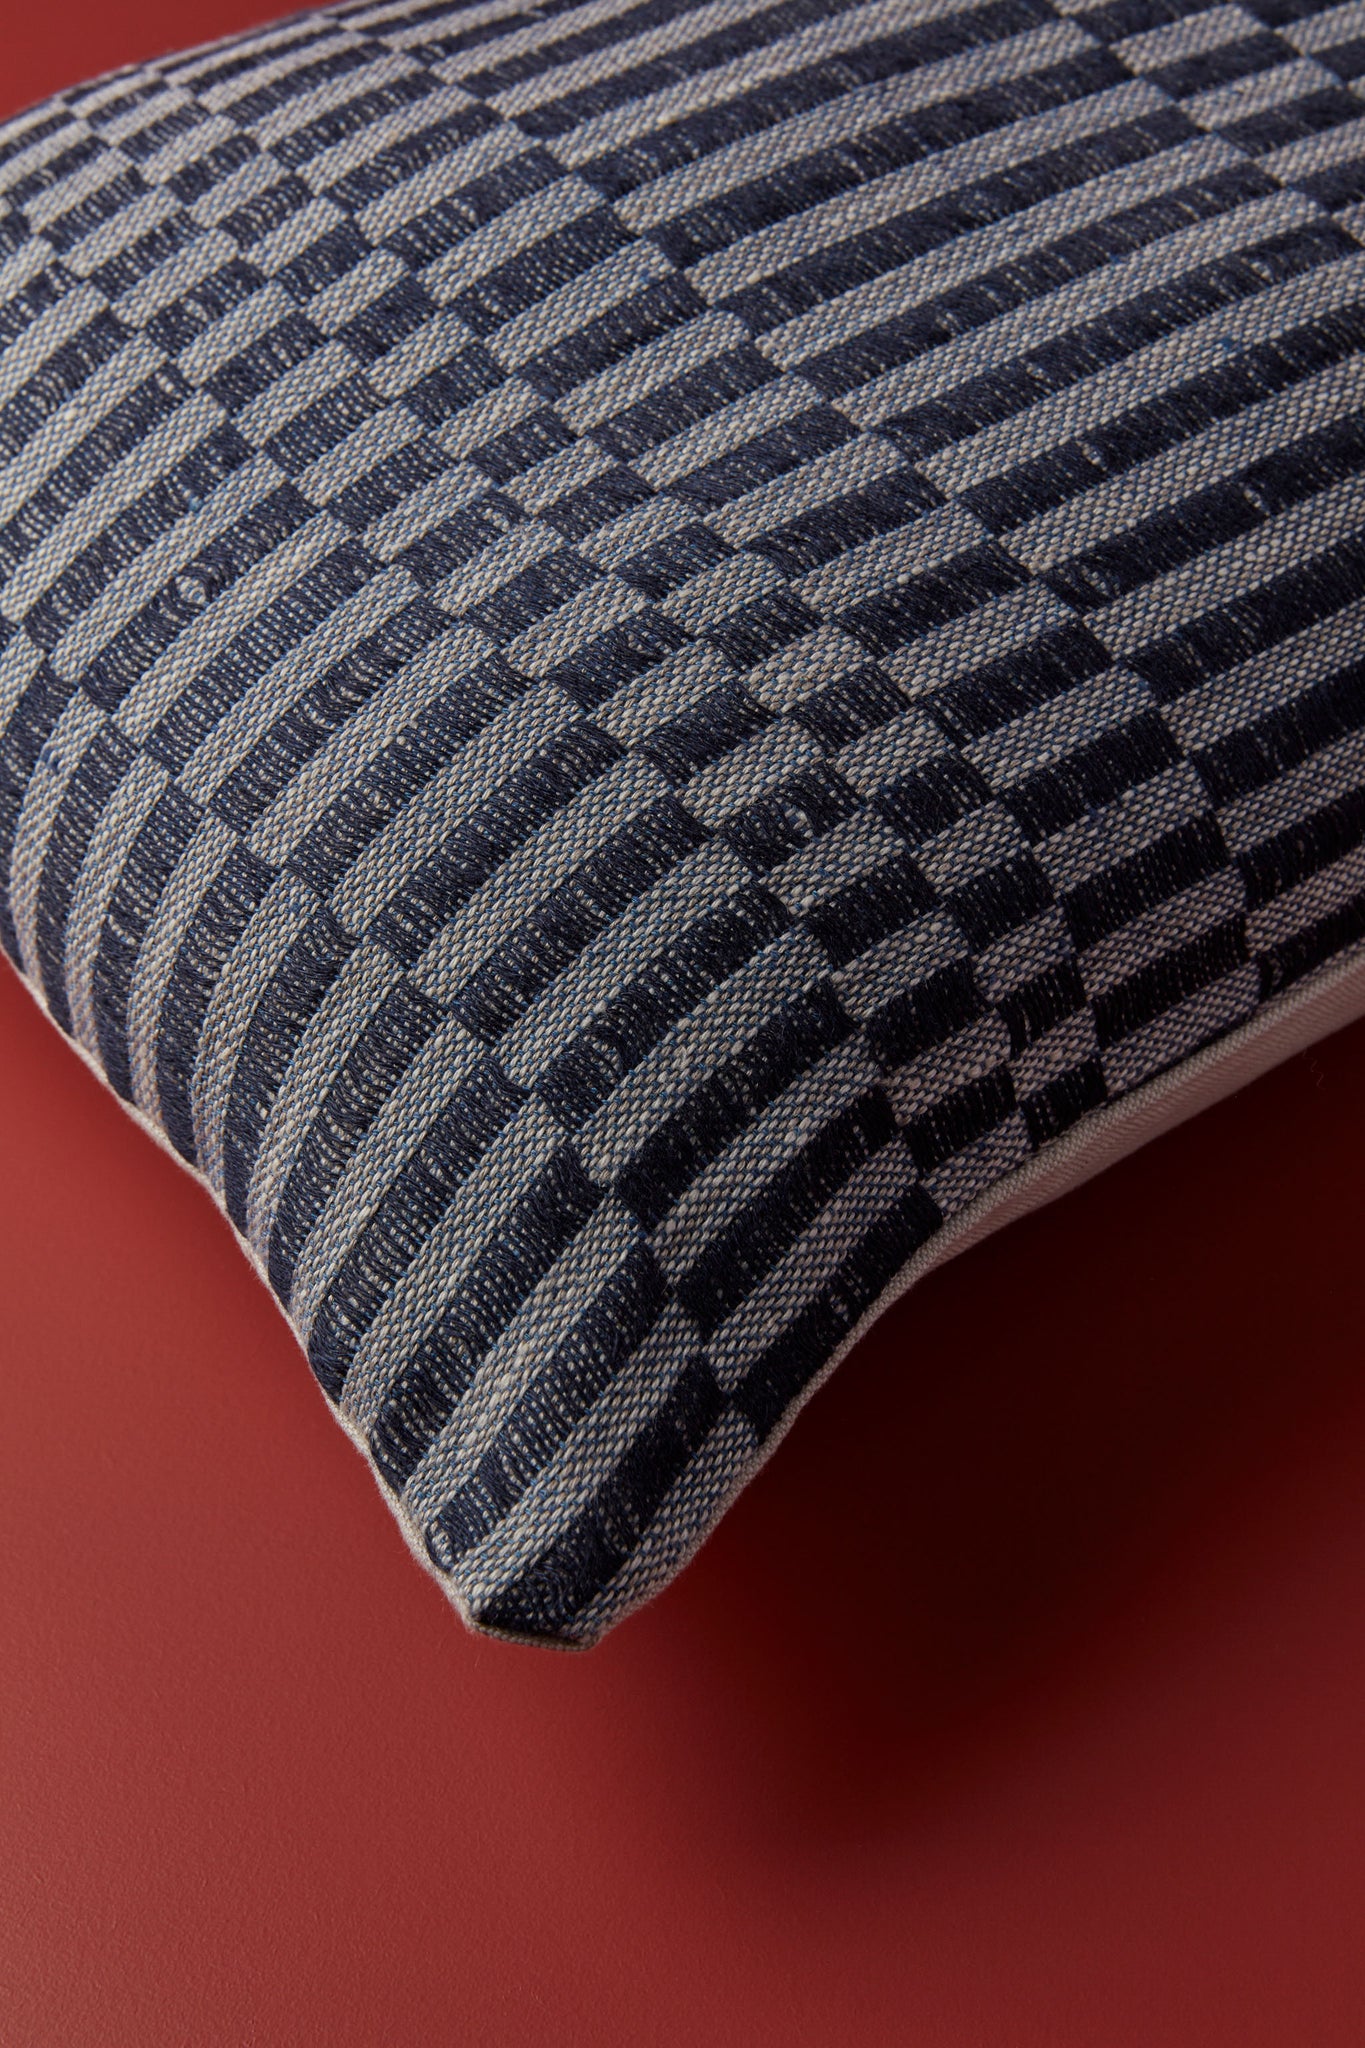 Sundance Studio - Rectangle Pillow, Navy Stripe